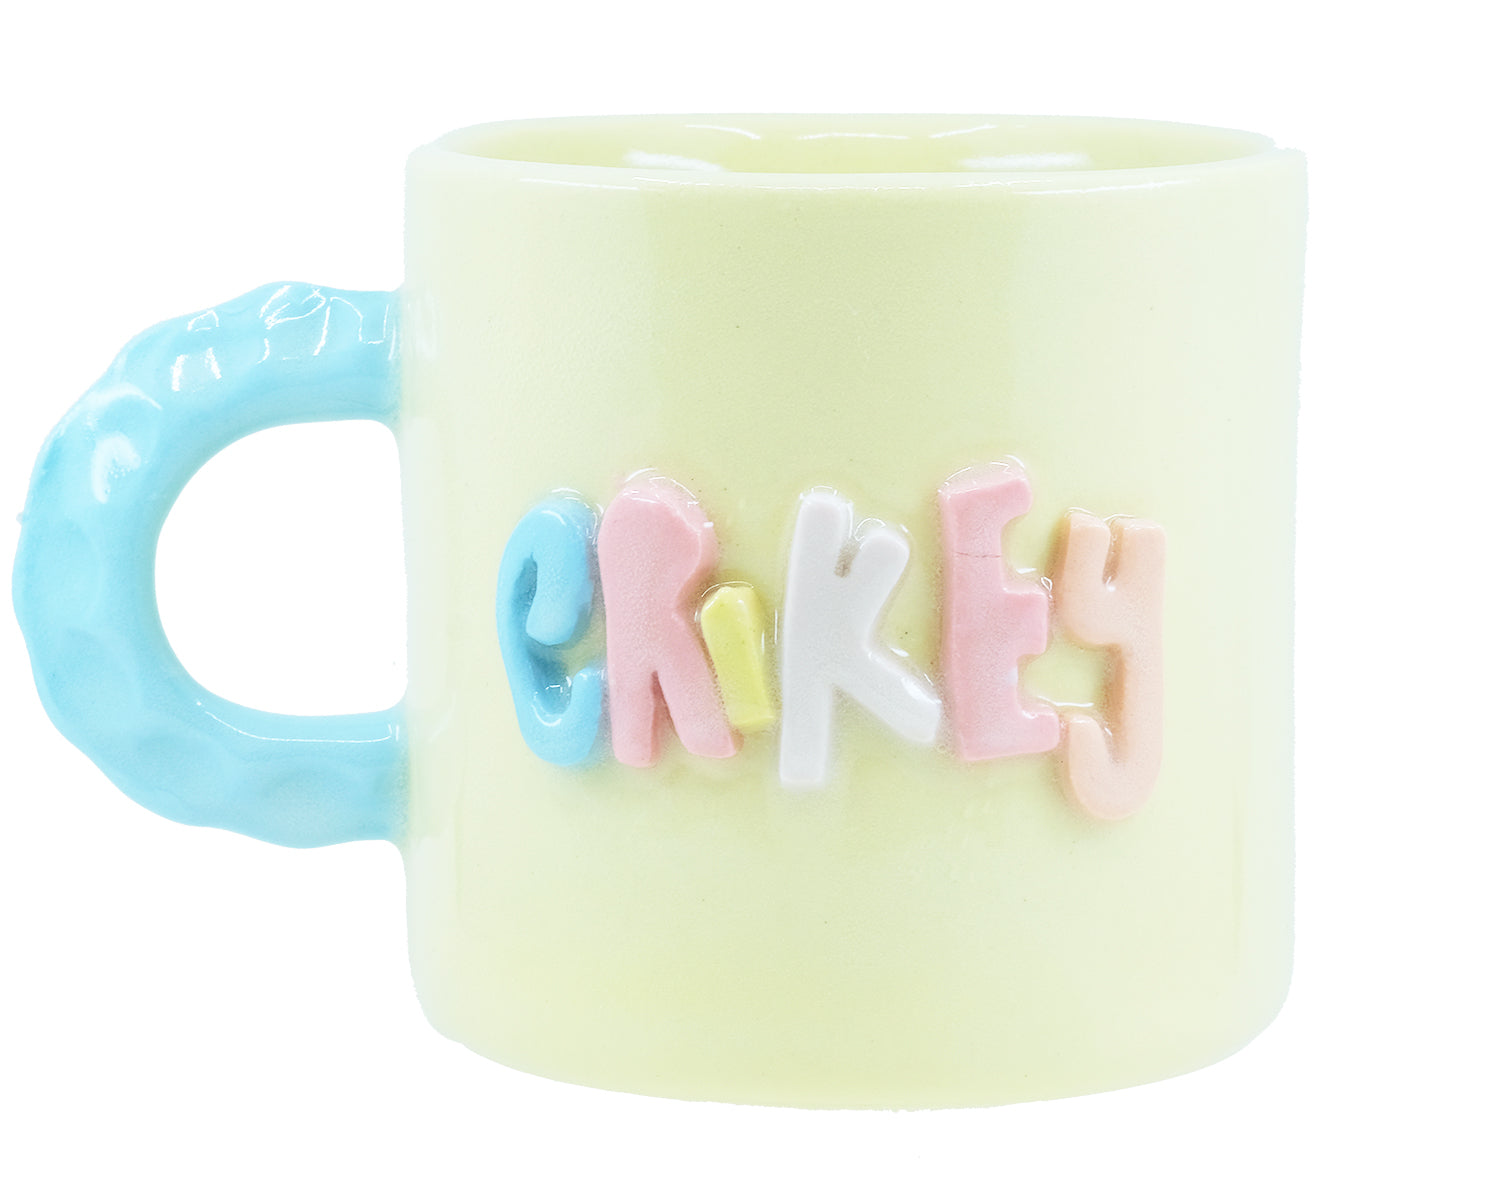 Crikey - Big mug